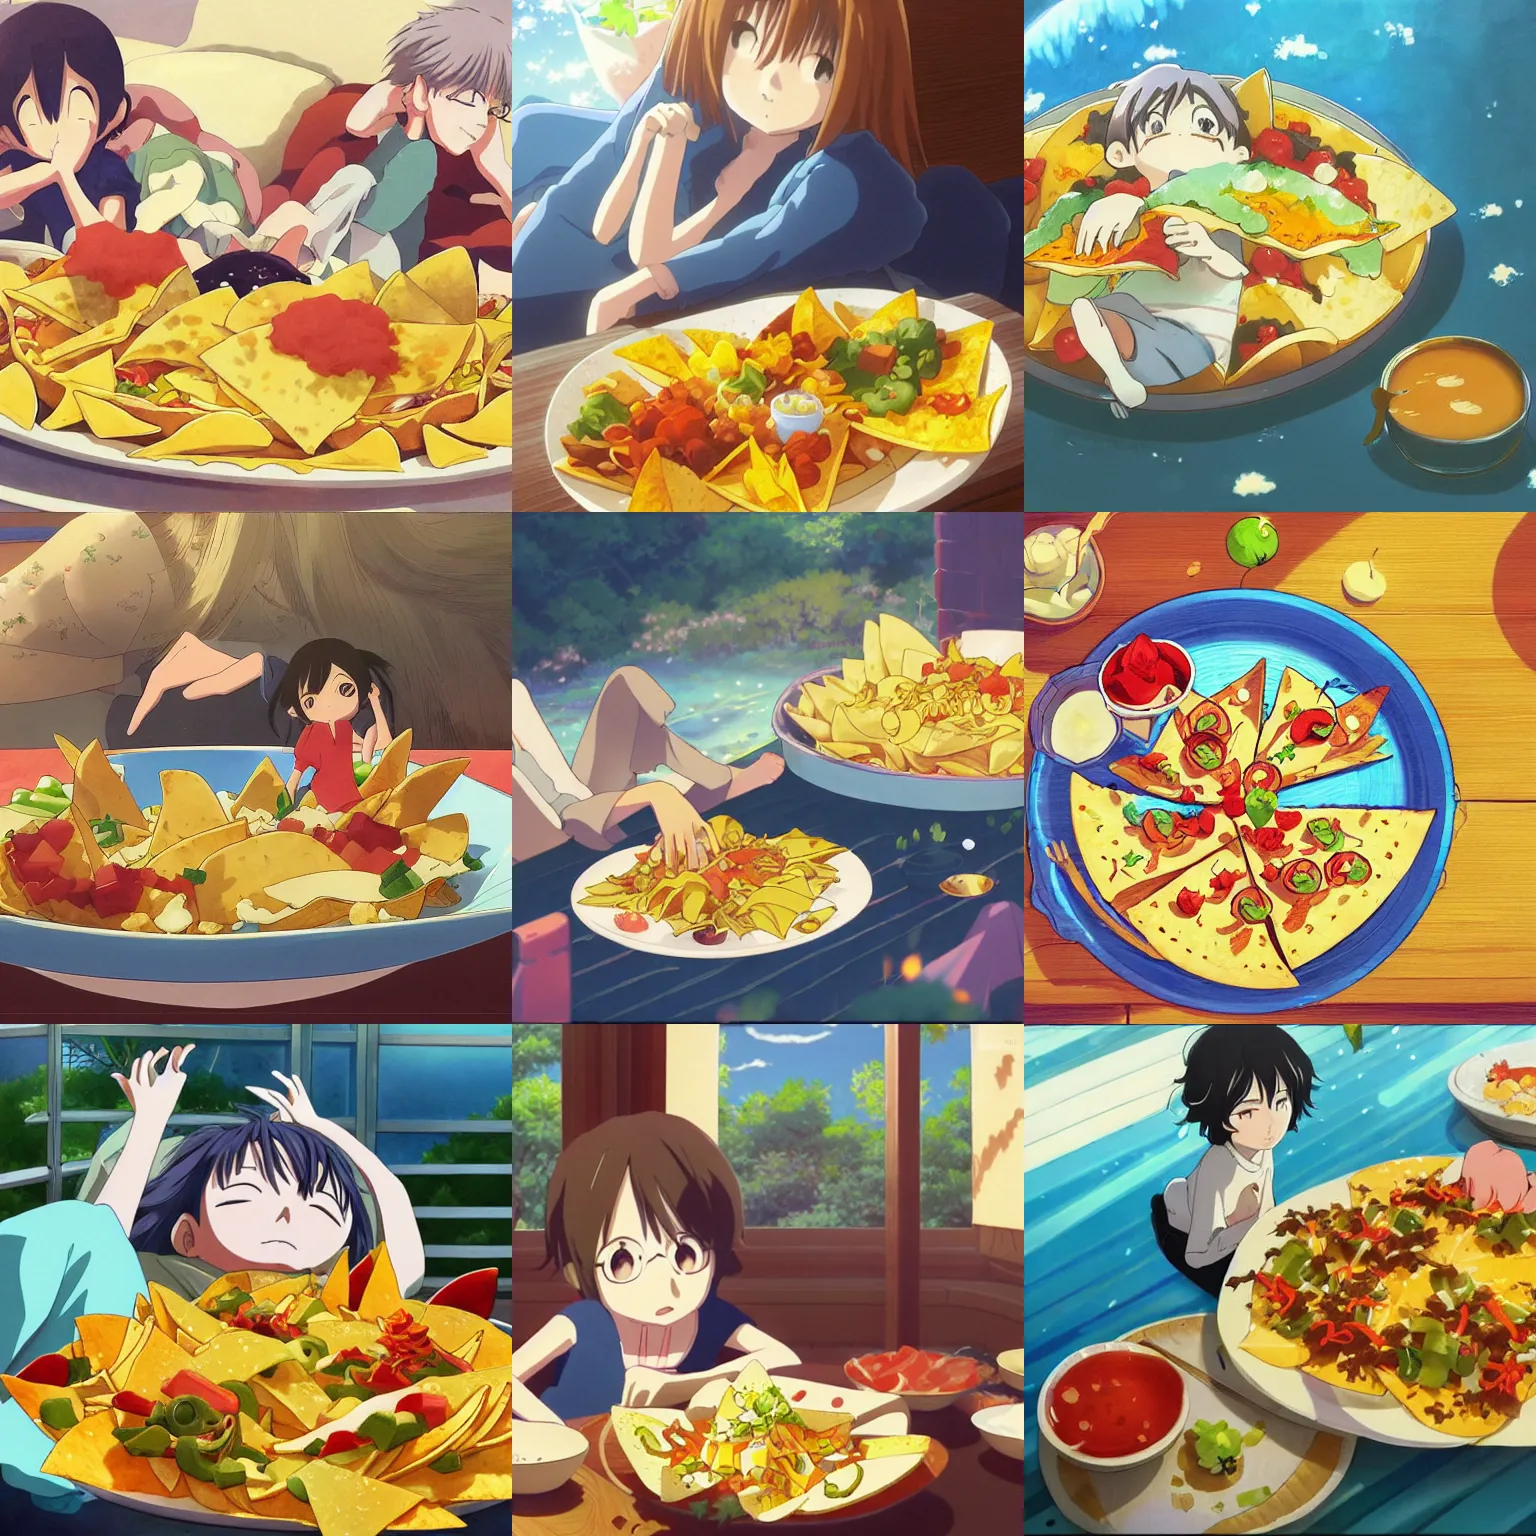 Prompt: beautiful anime illustration of plate of nachos, relaxing, calm, cozy, peaceful, by mamoru hosoda, hayao miyazaki, makoto shinkai